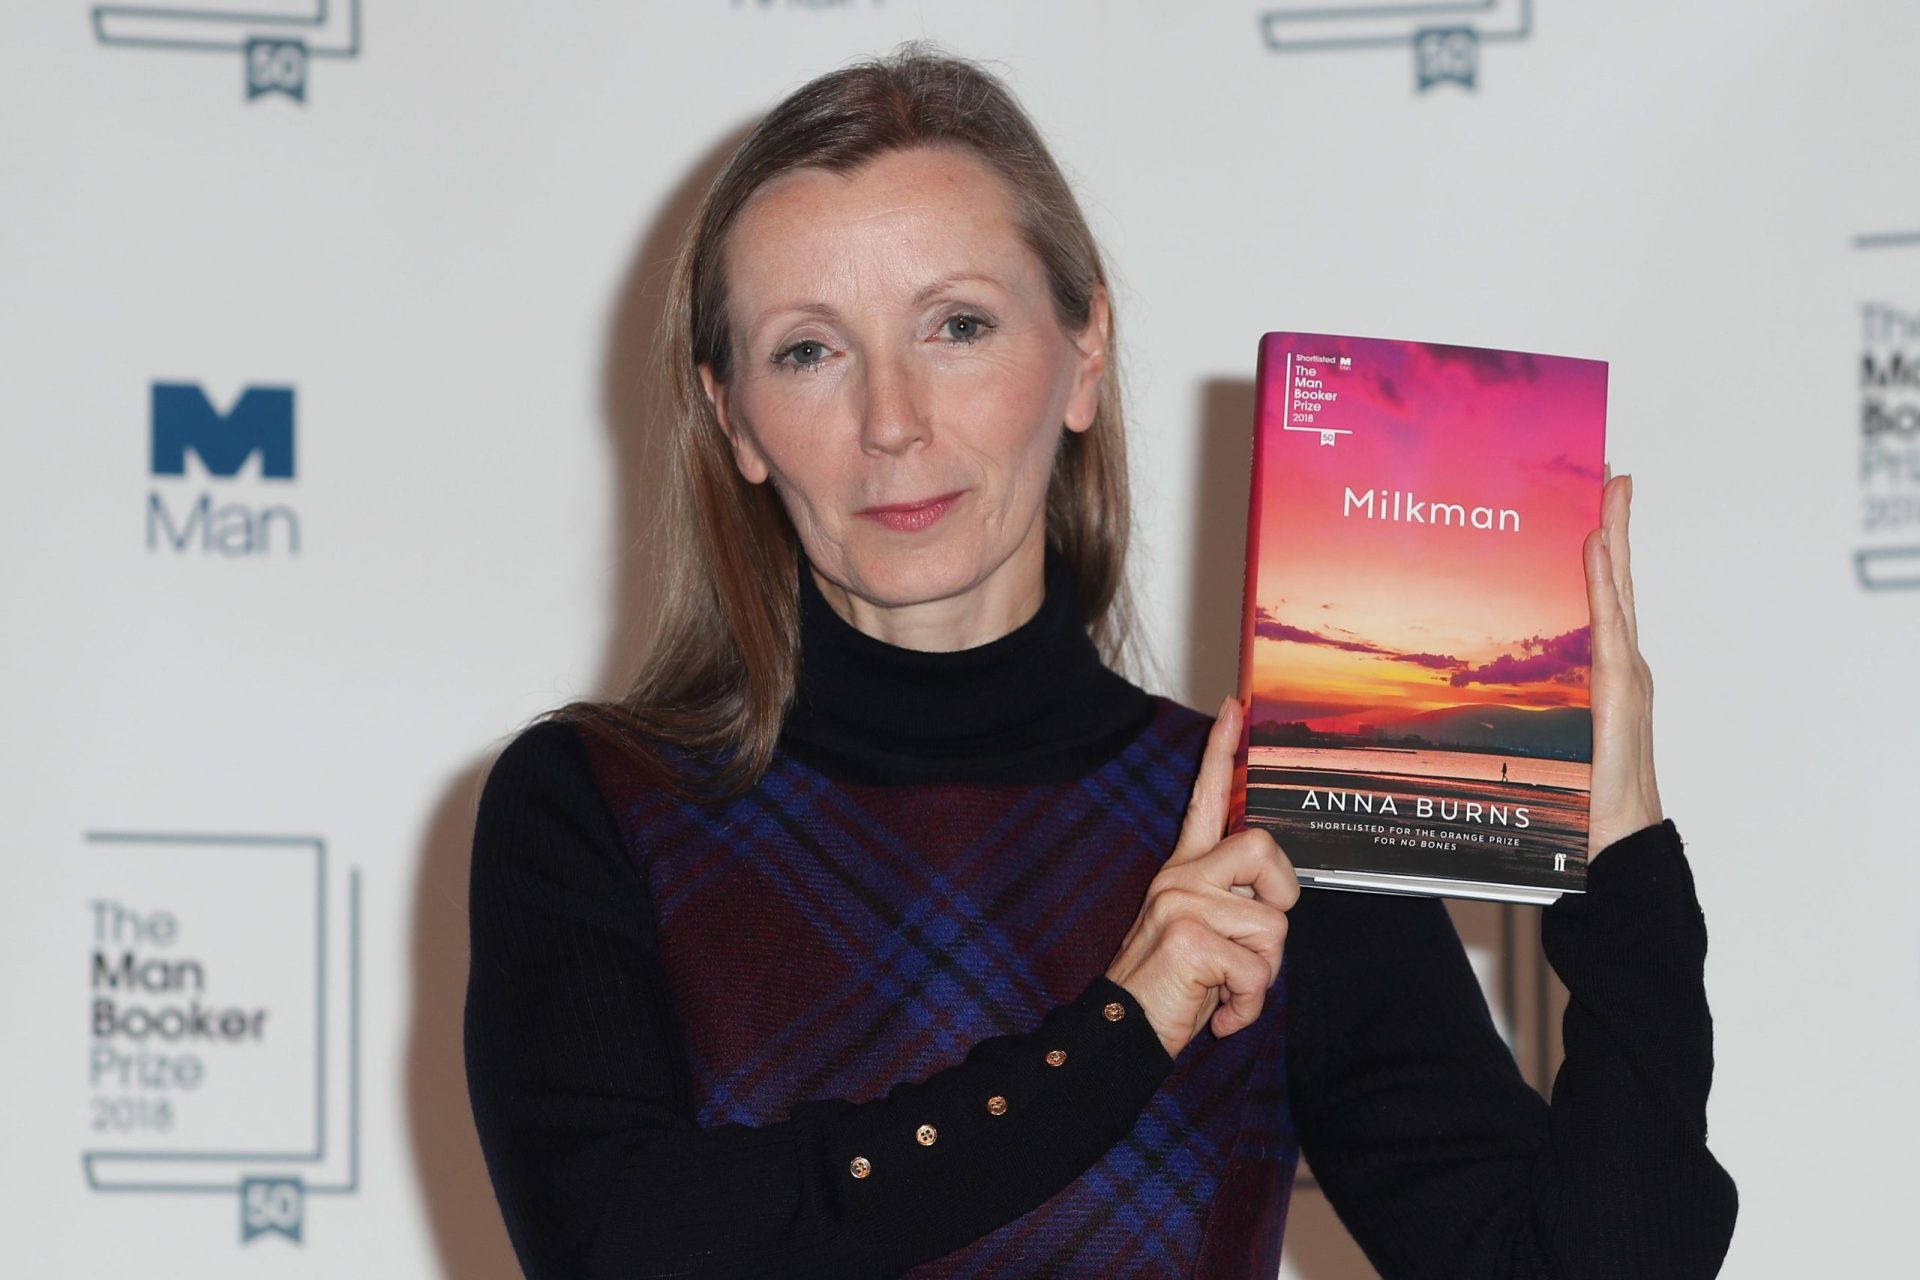 Anna Burns vence o 50º Booker Prize